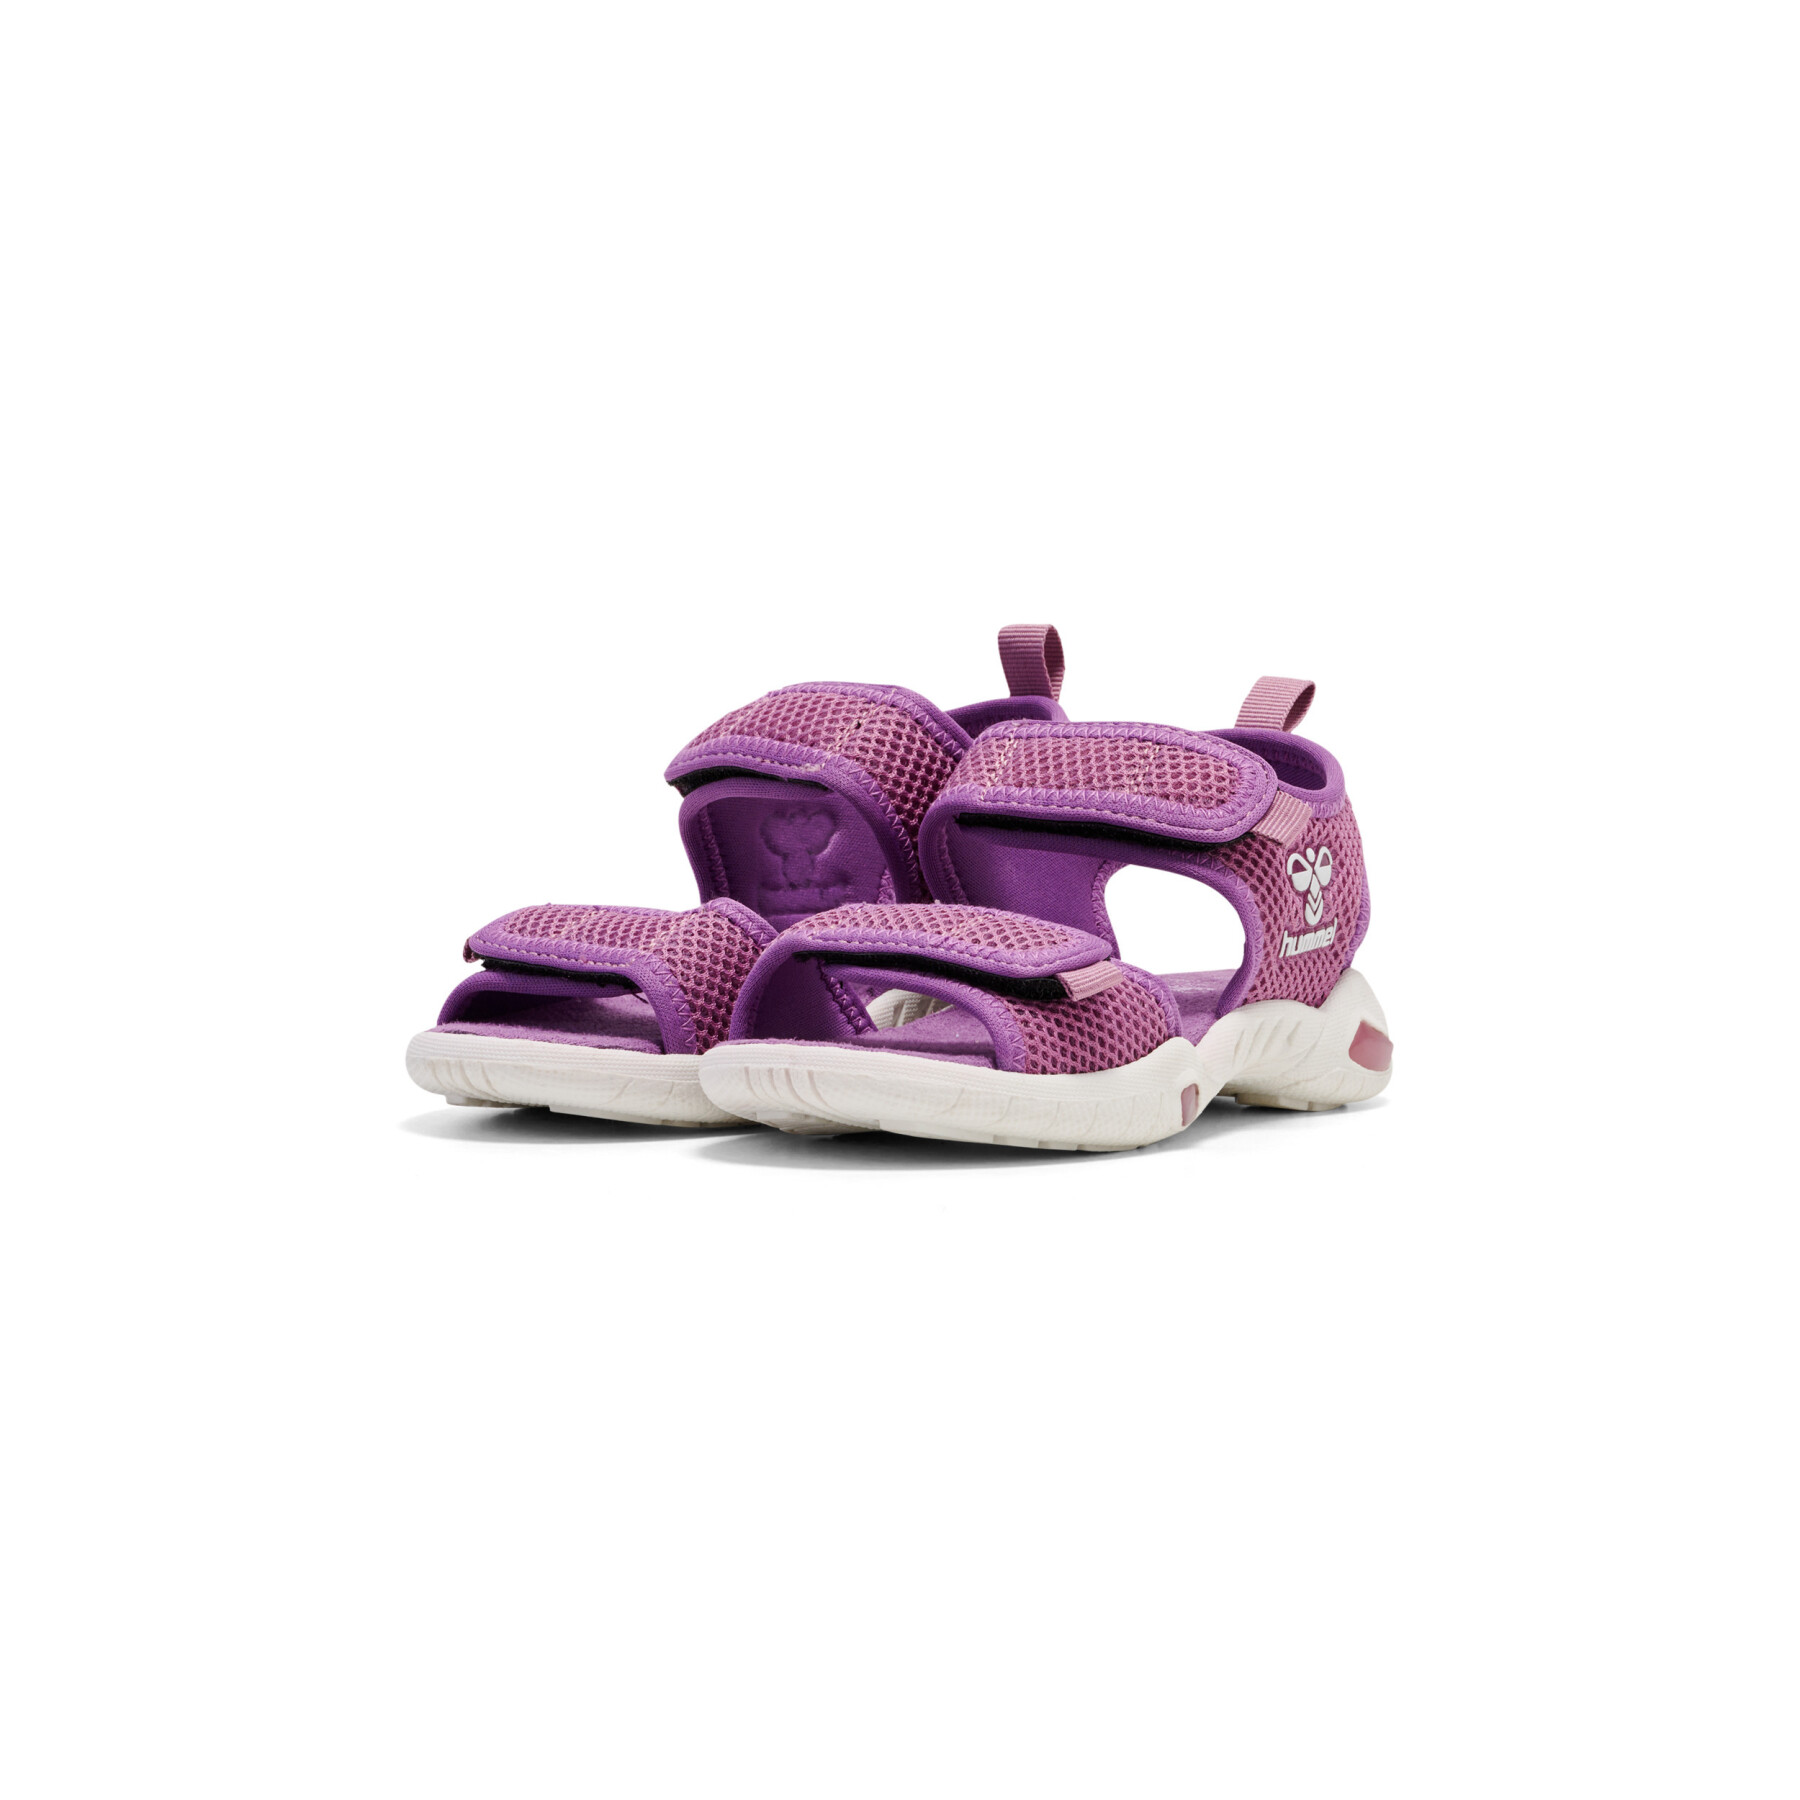 Children's sandals Hummel